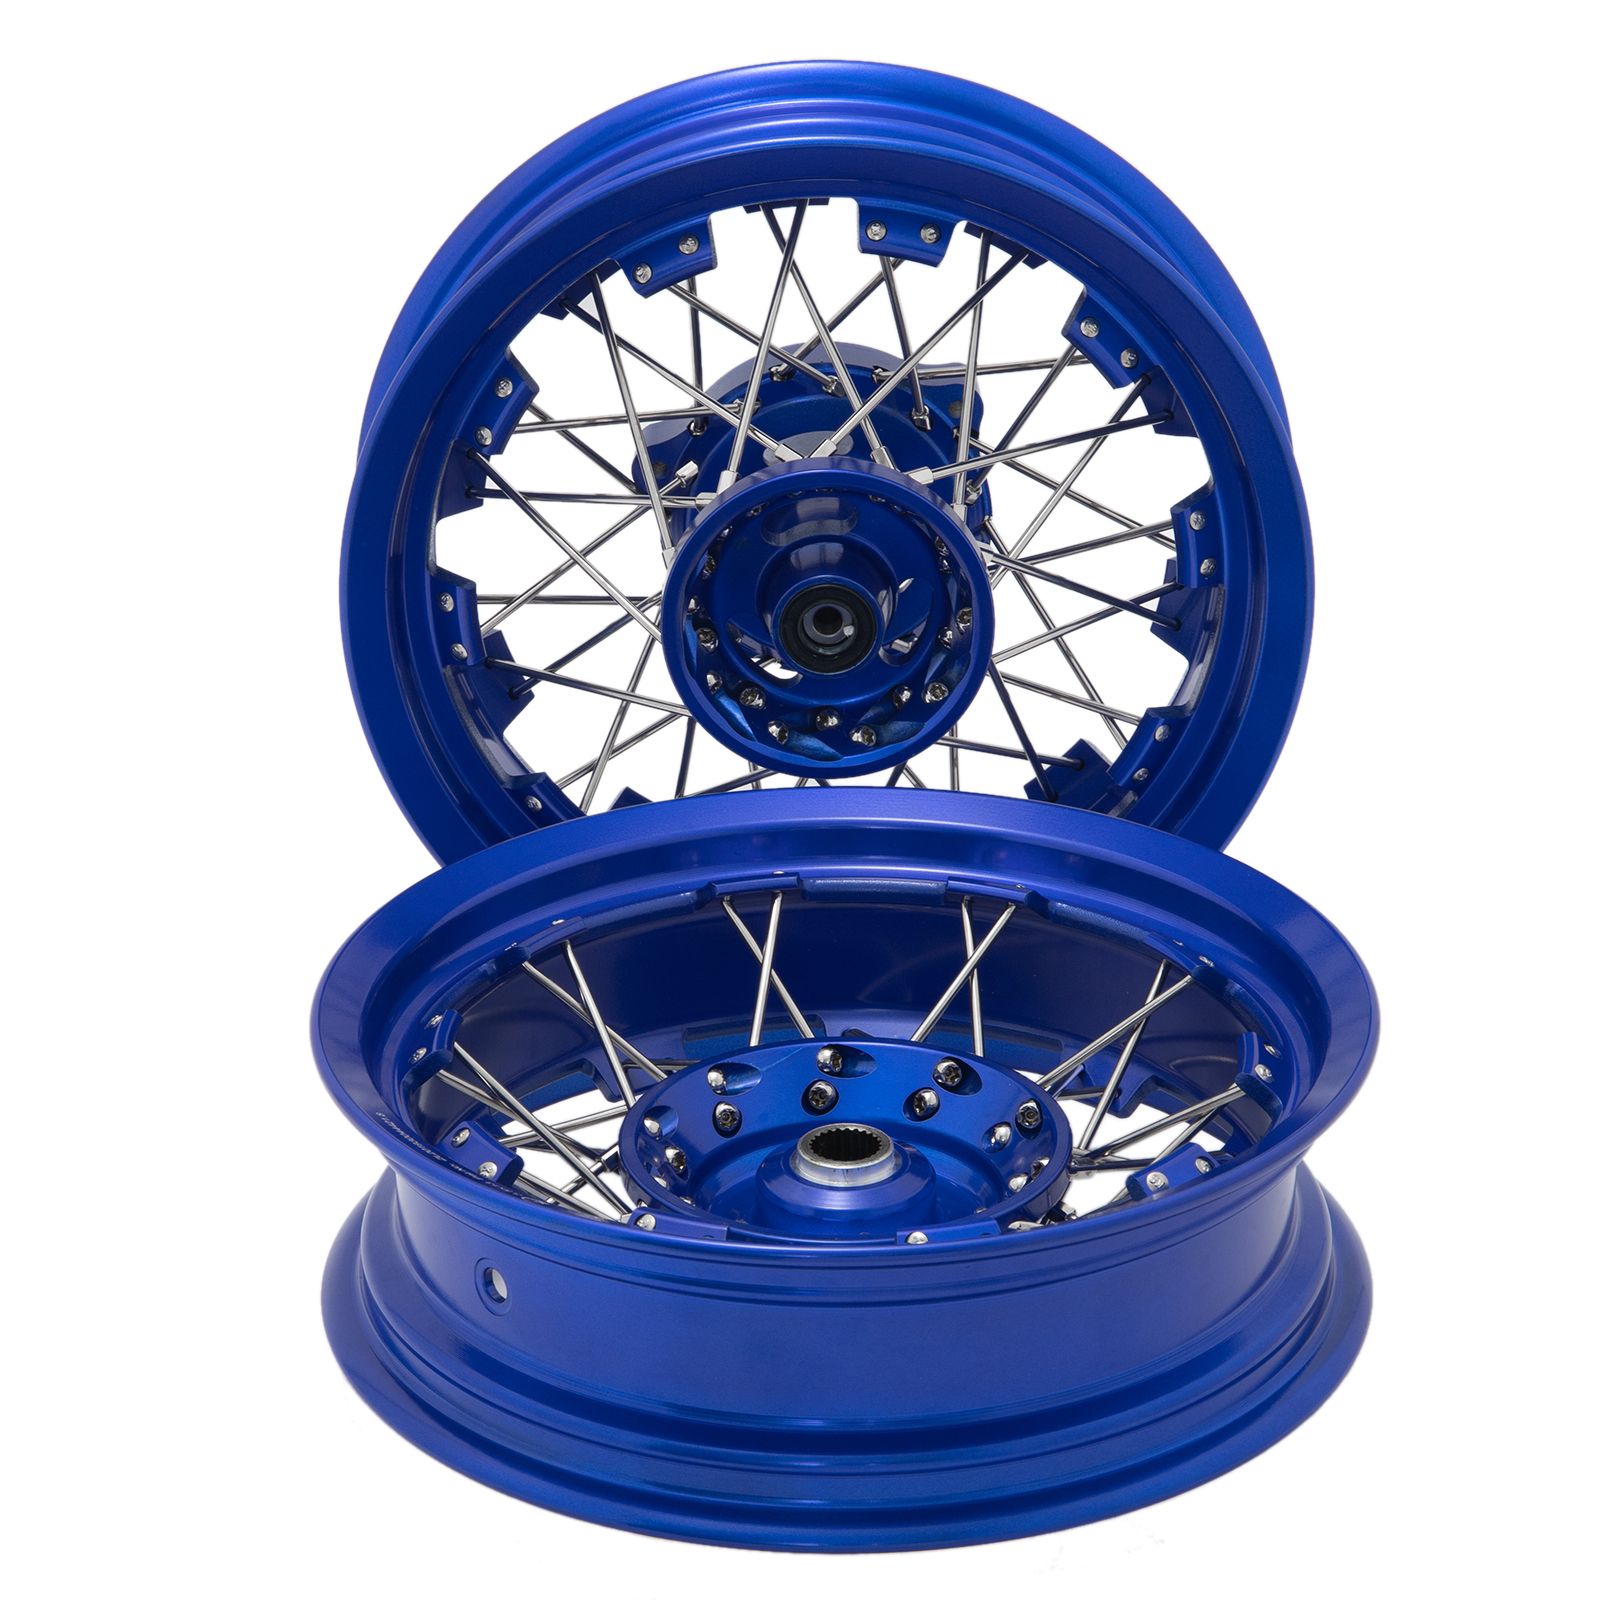 Custom 13 Inch Spoke Cast Wheel Rim Sets for Motorcycle Yamaha NMAX 